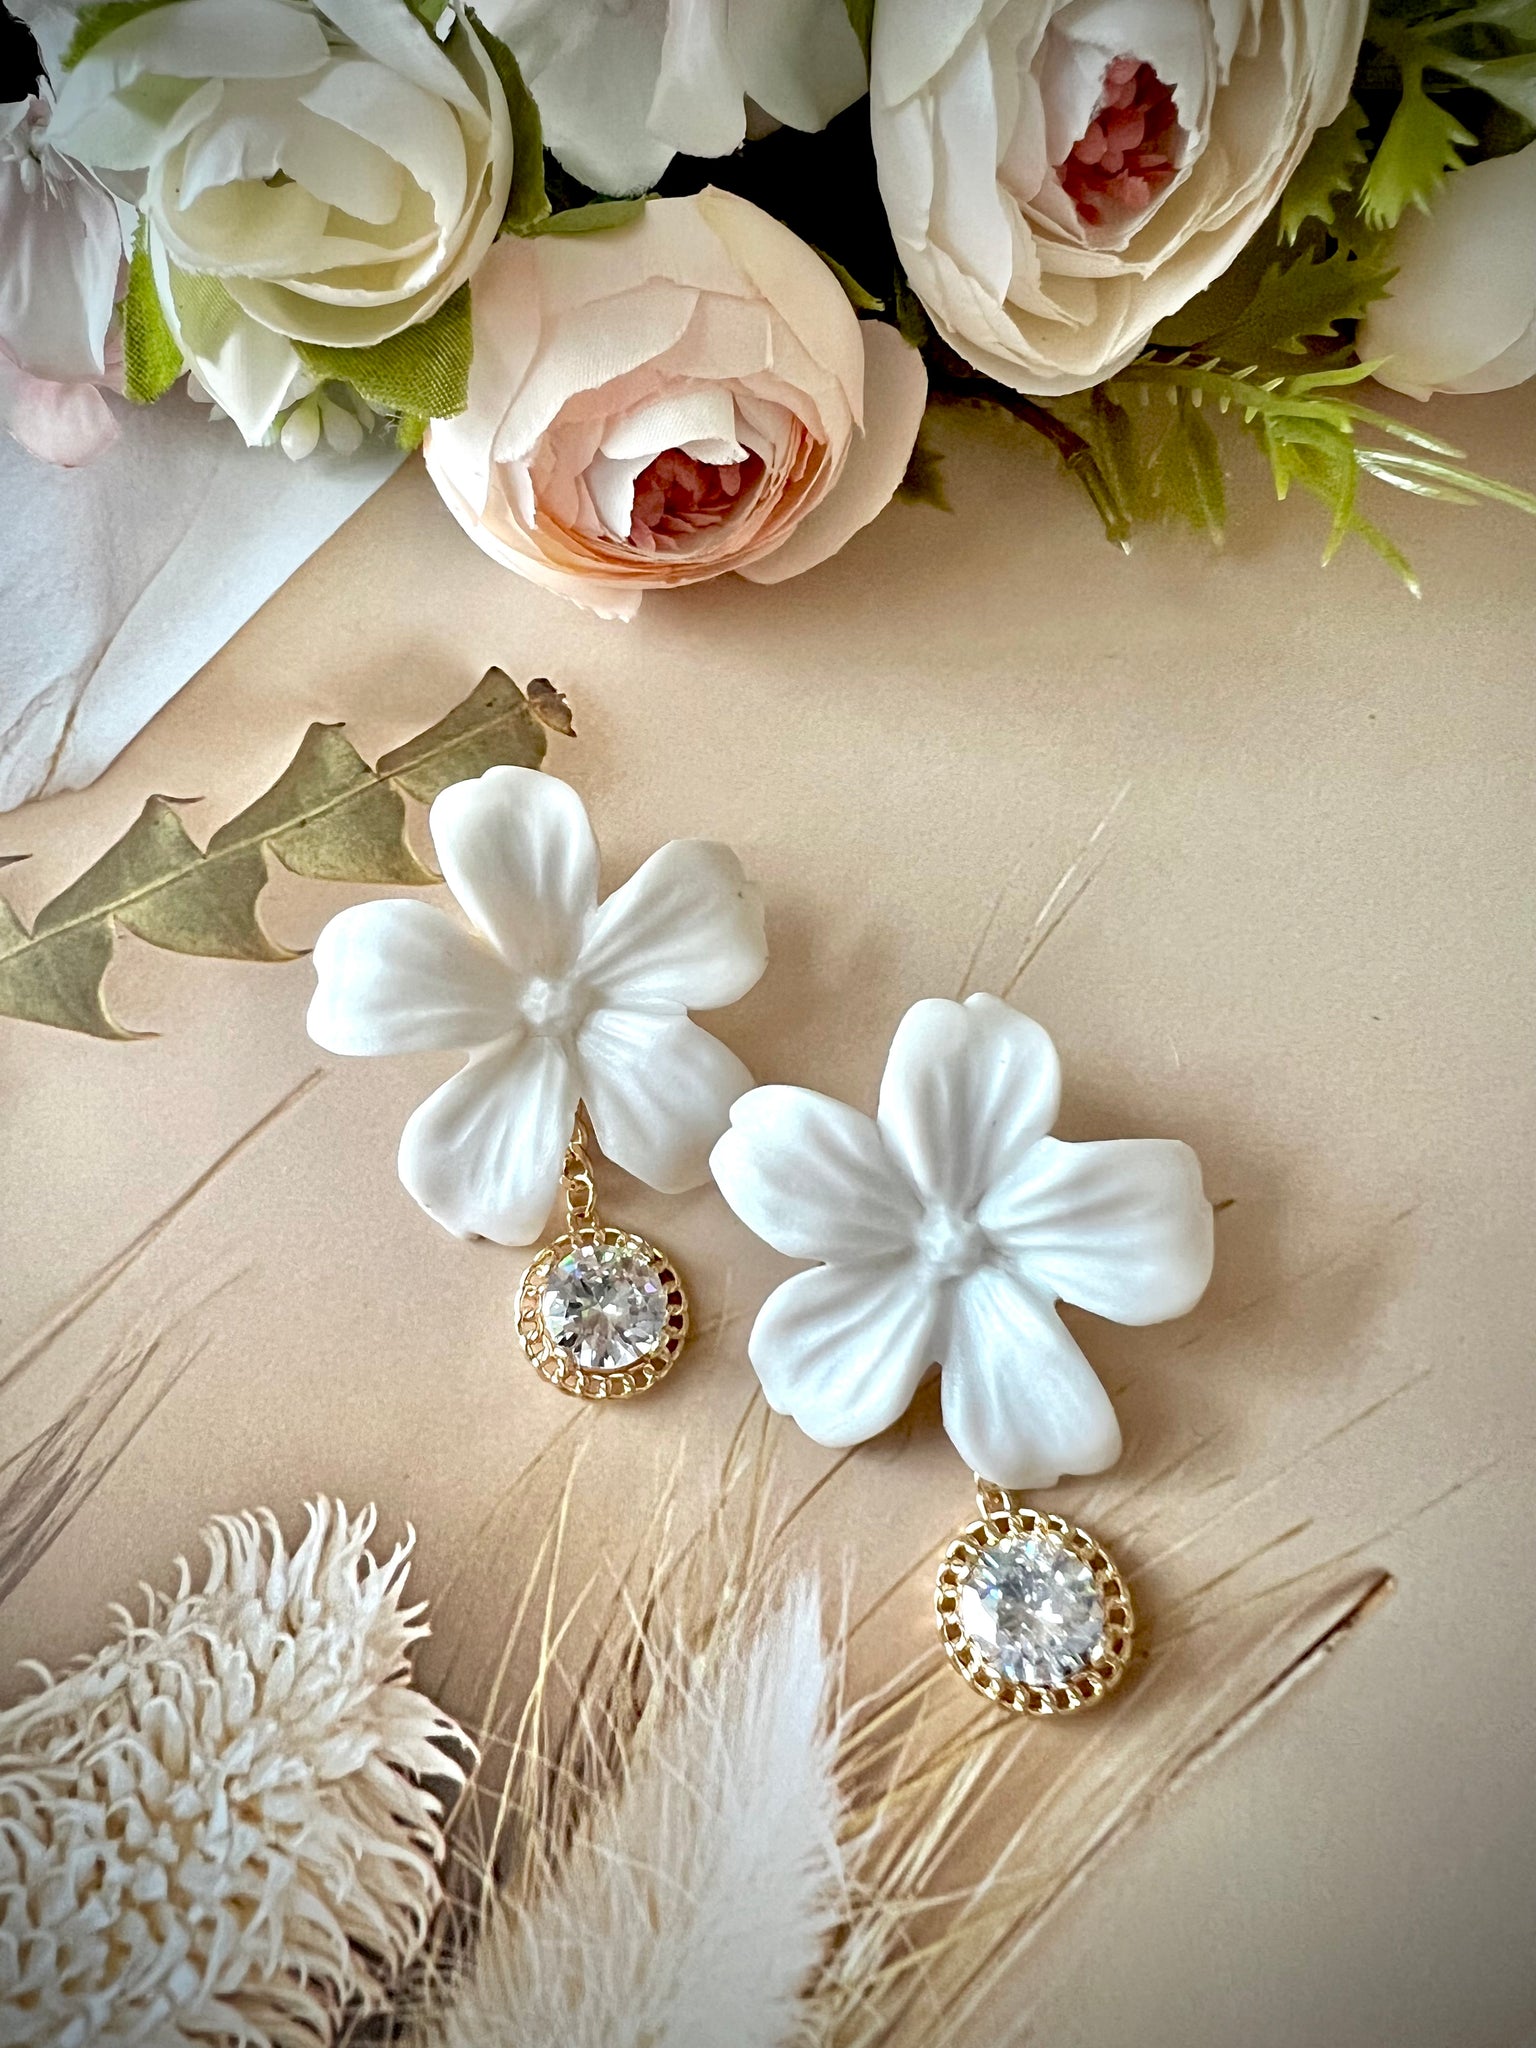 Chic in White Flower Earrings